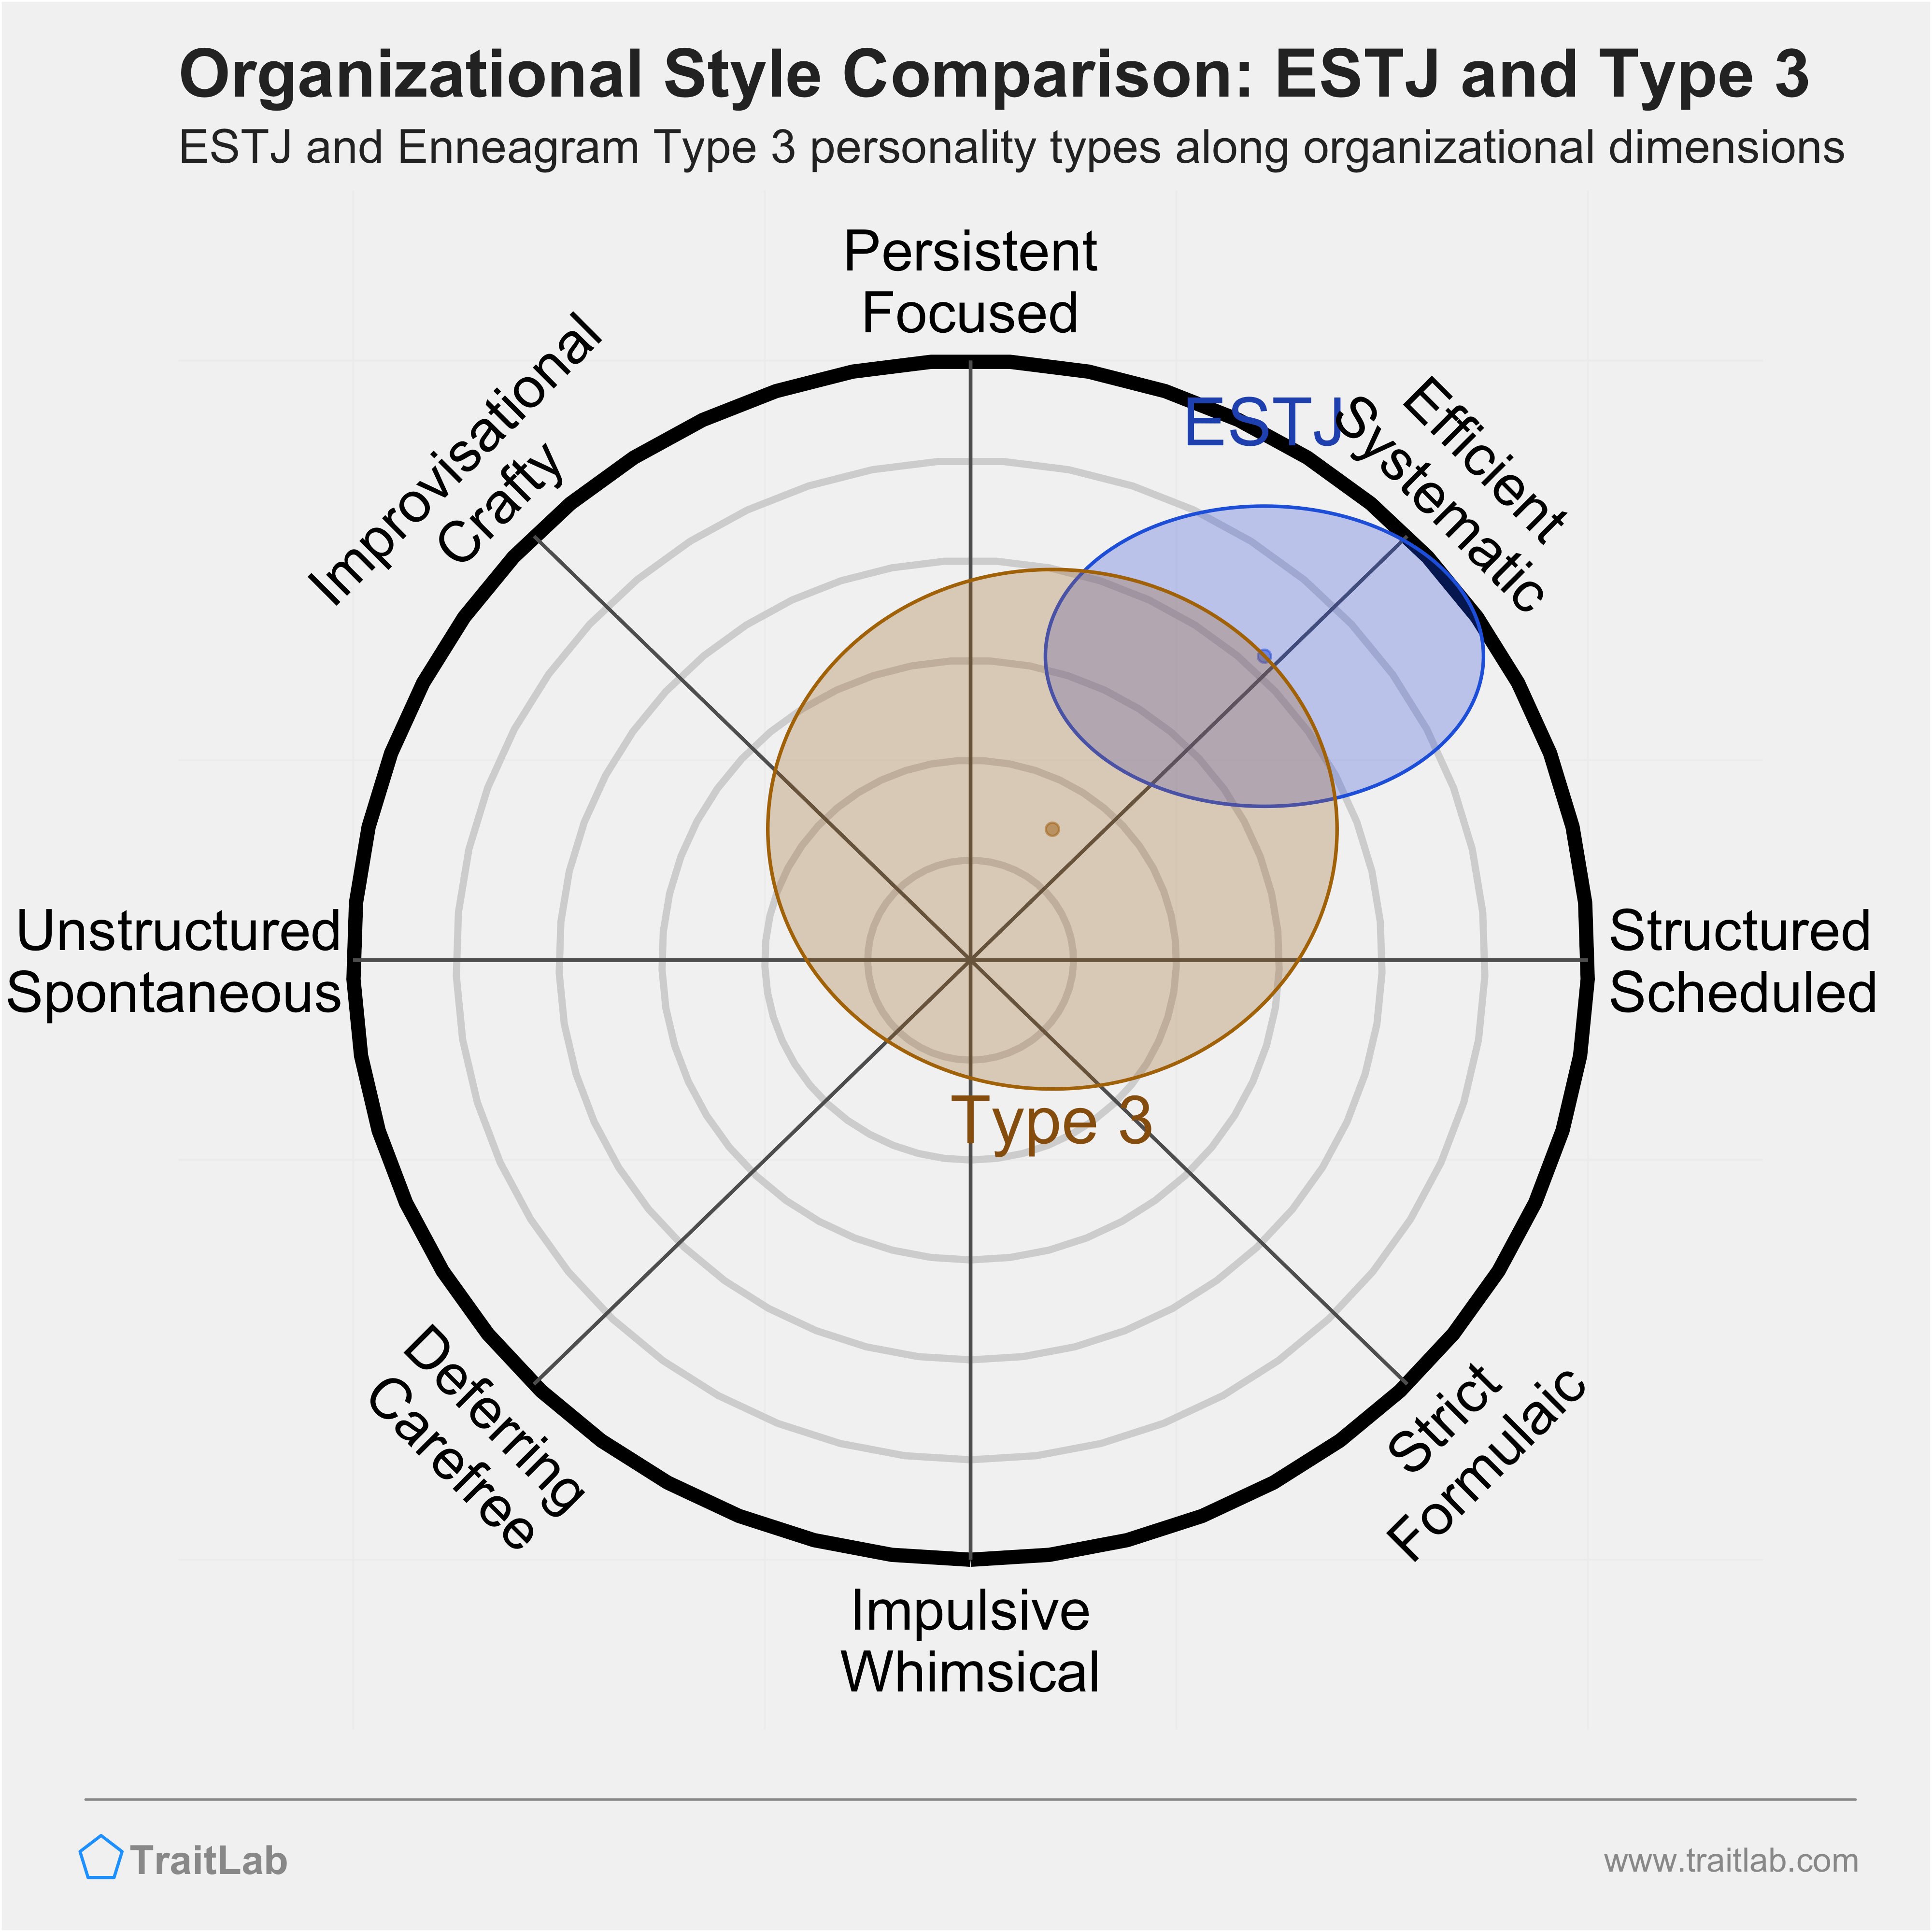 ESTJ and Type 3 comparison across organizational dimensions